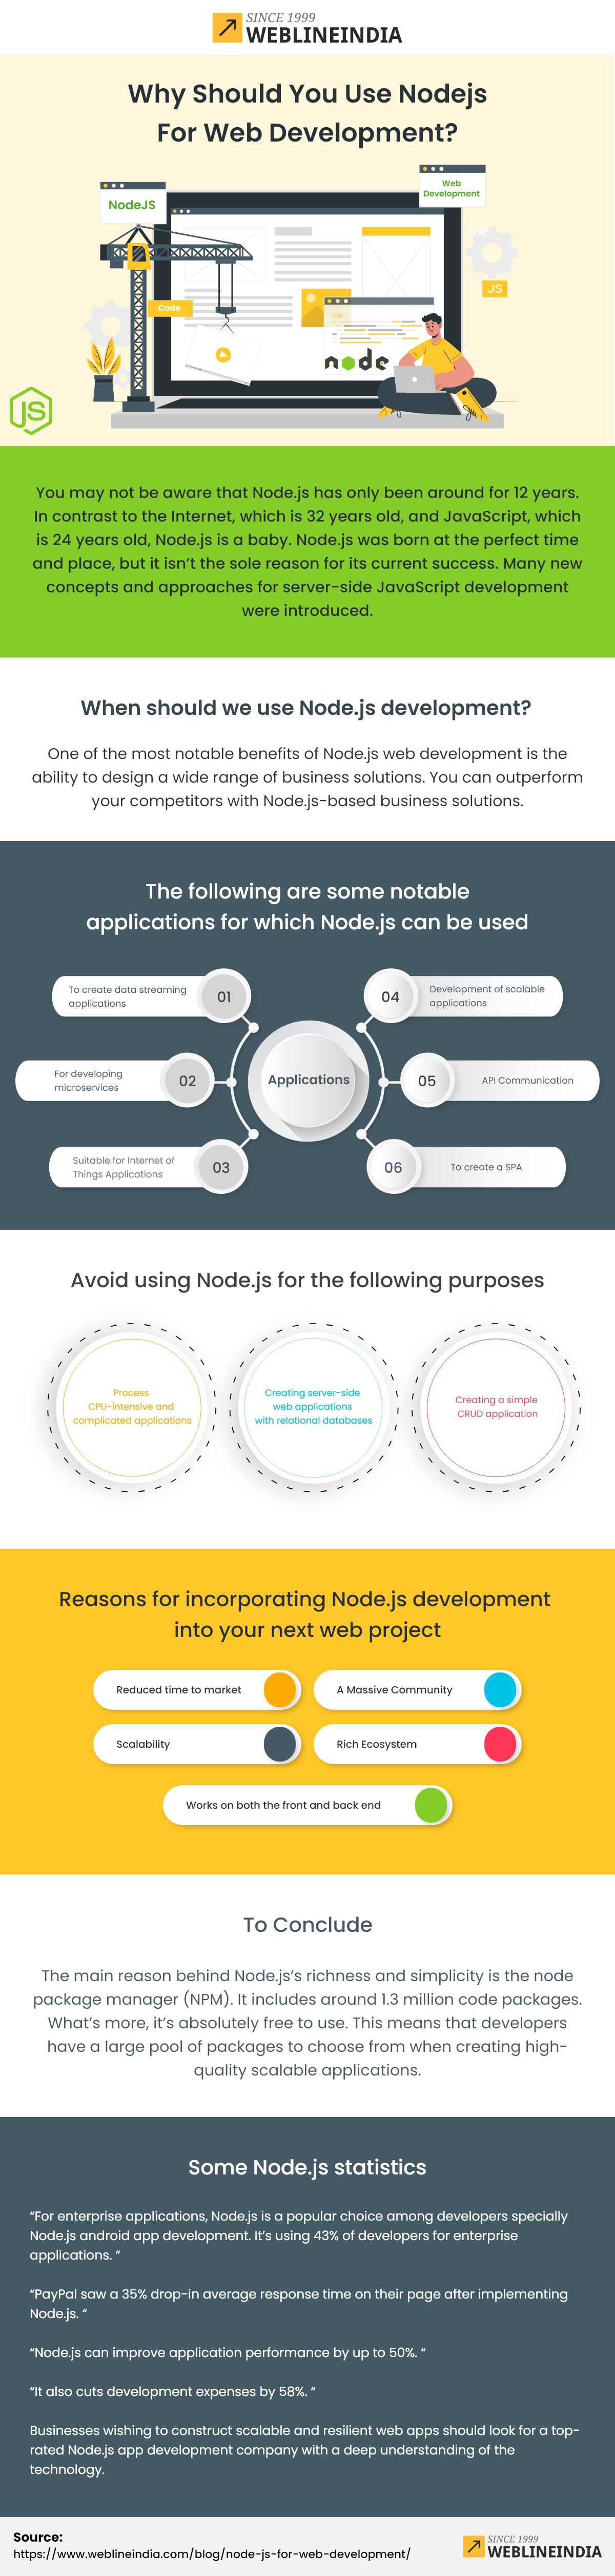 Node.js For Web Development Infographic